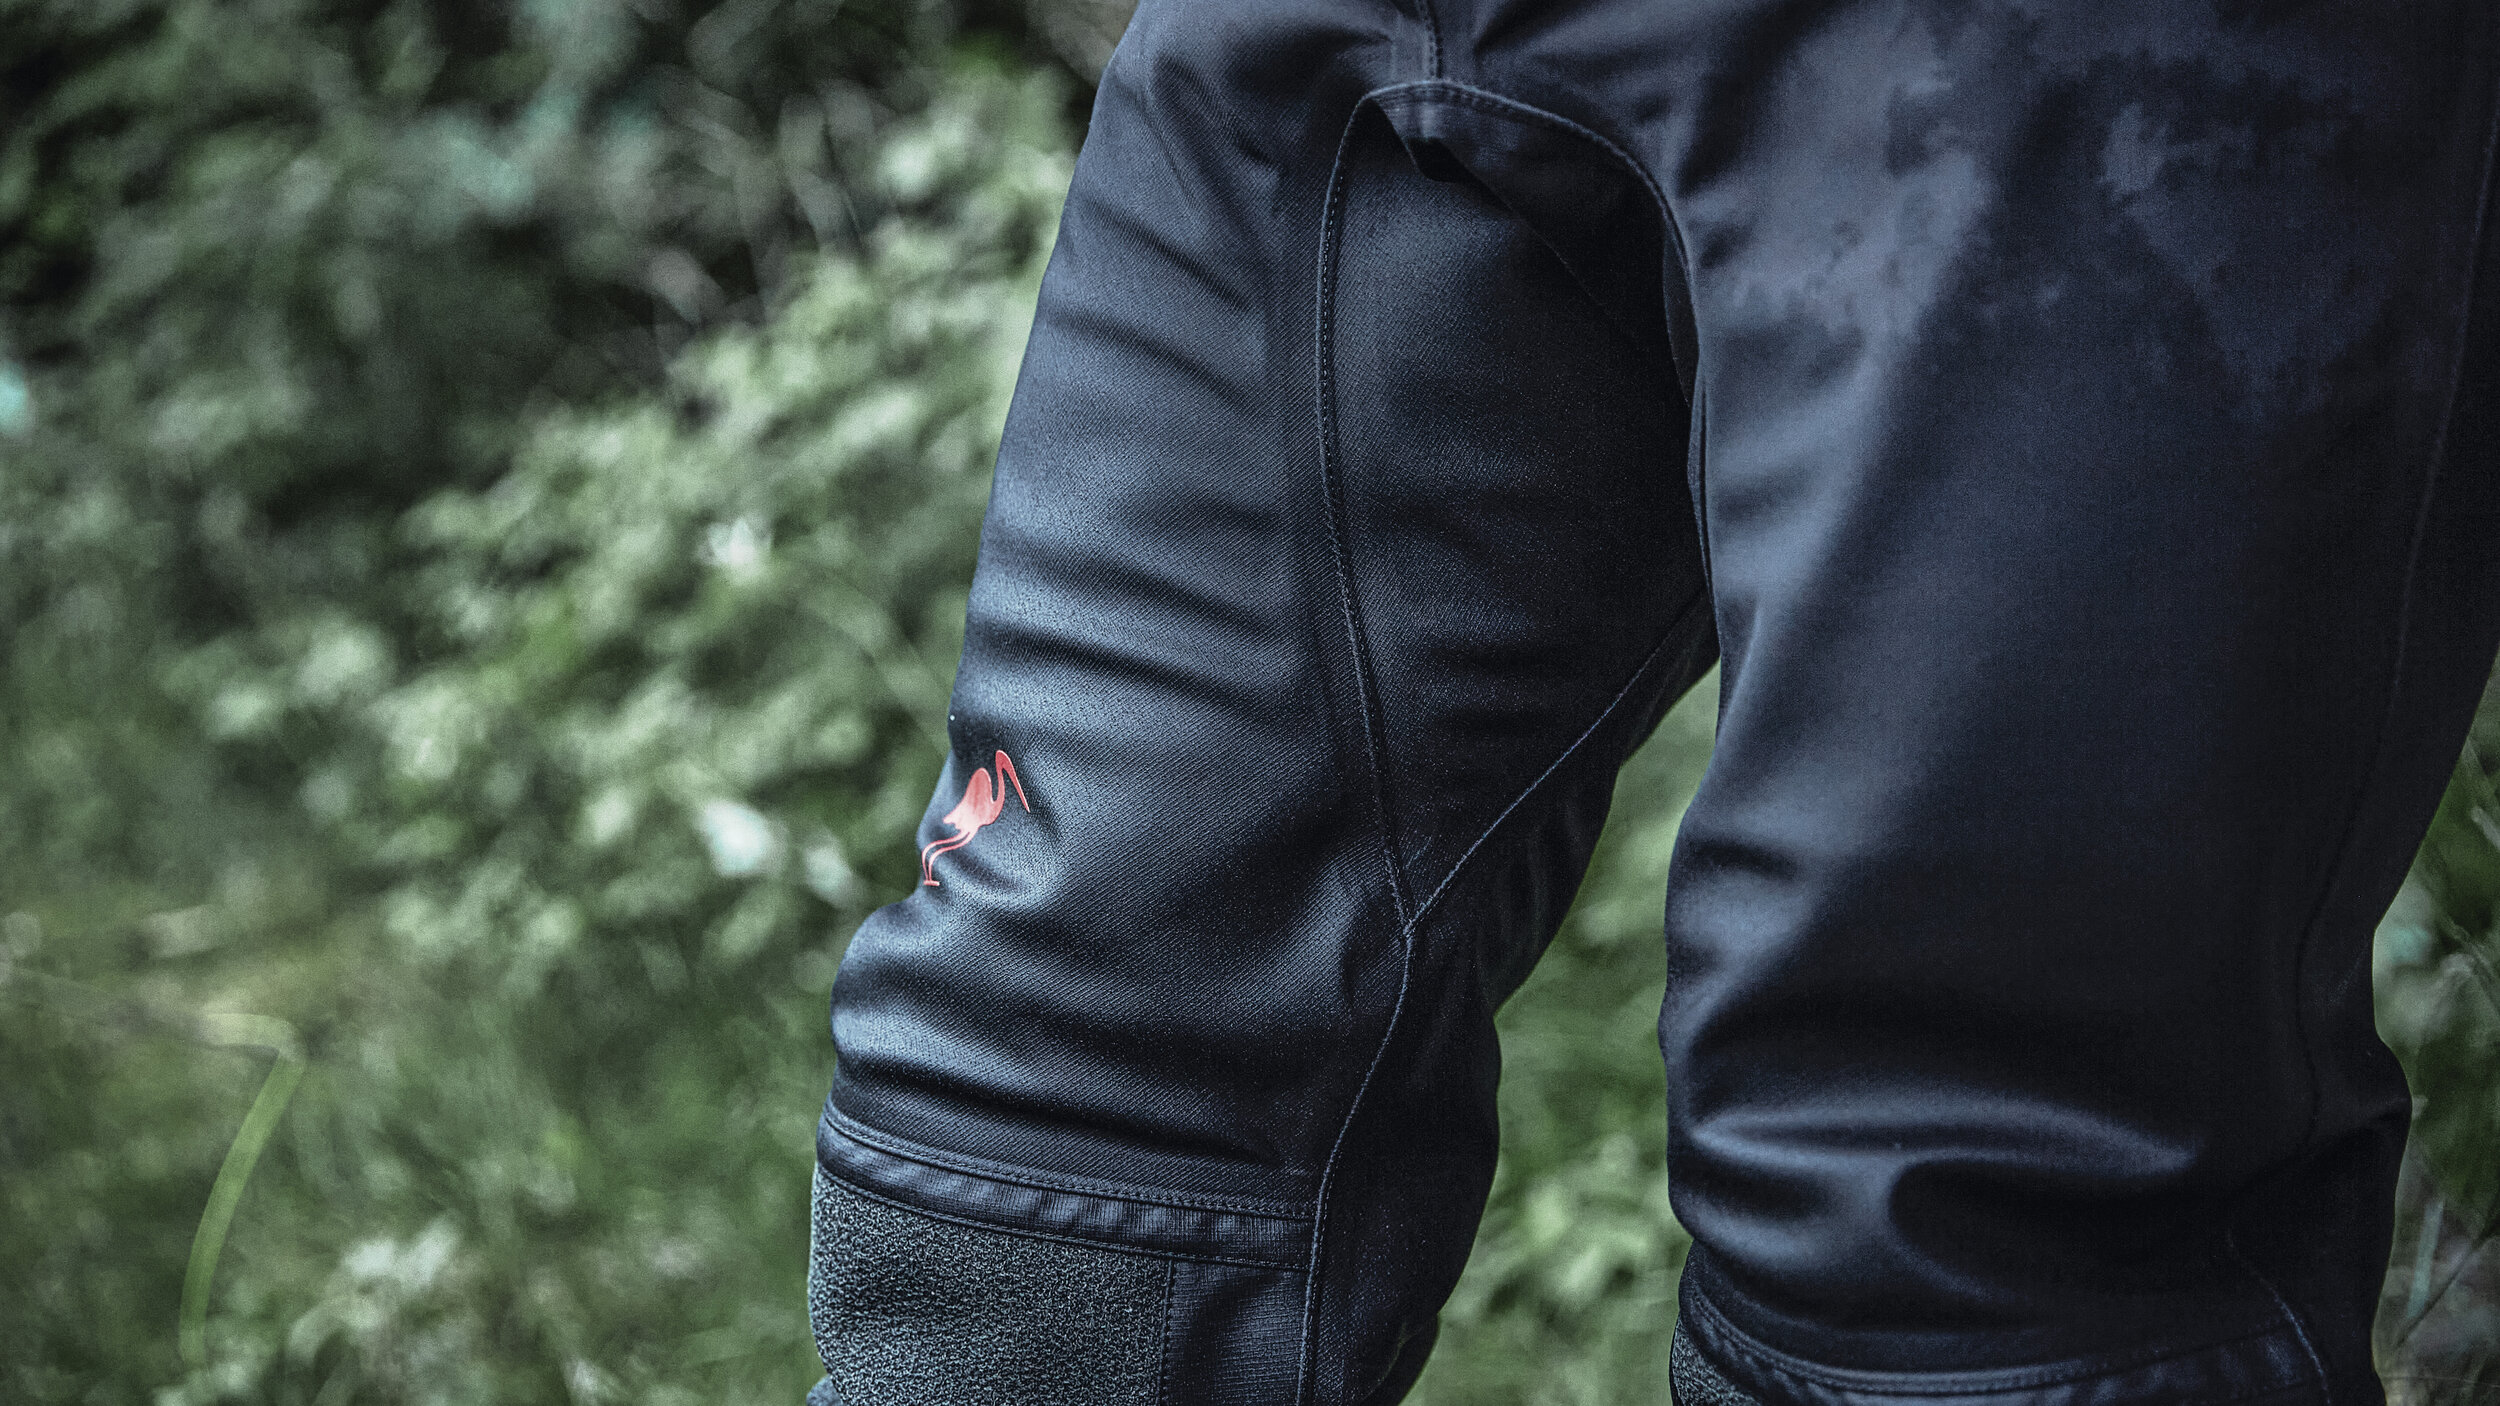  Pantaloni Marais Waders neoprene 4 mm  isolamento VTK Sports  Comfort  flessibilità  Summum CW  